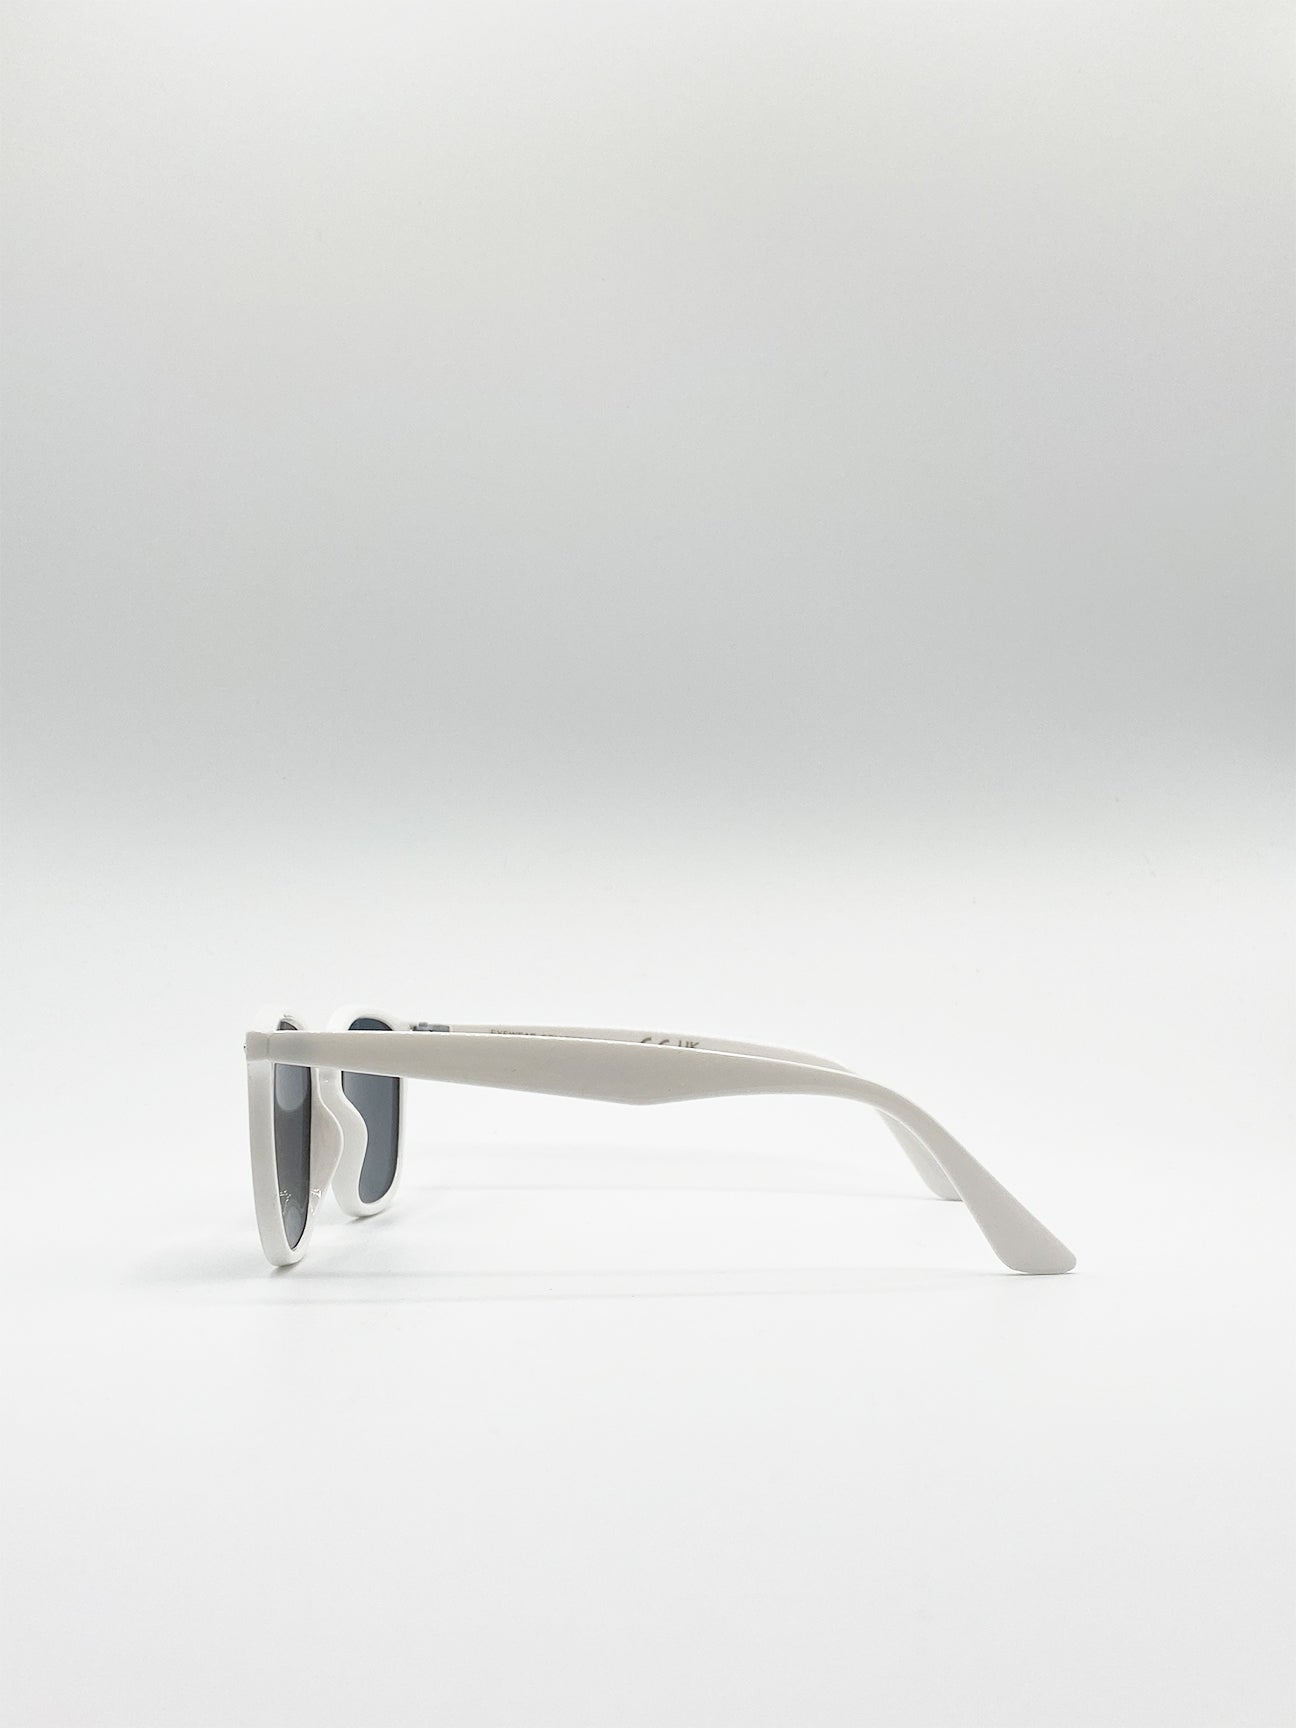 White Classic Preppy Square Sunglasses With Key Hole Nosebridge